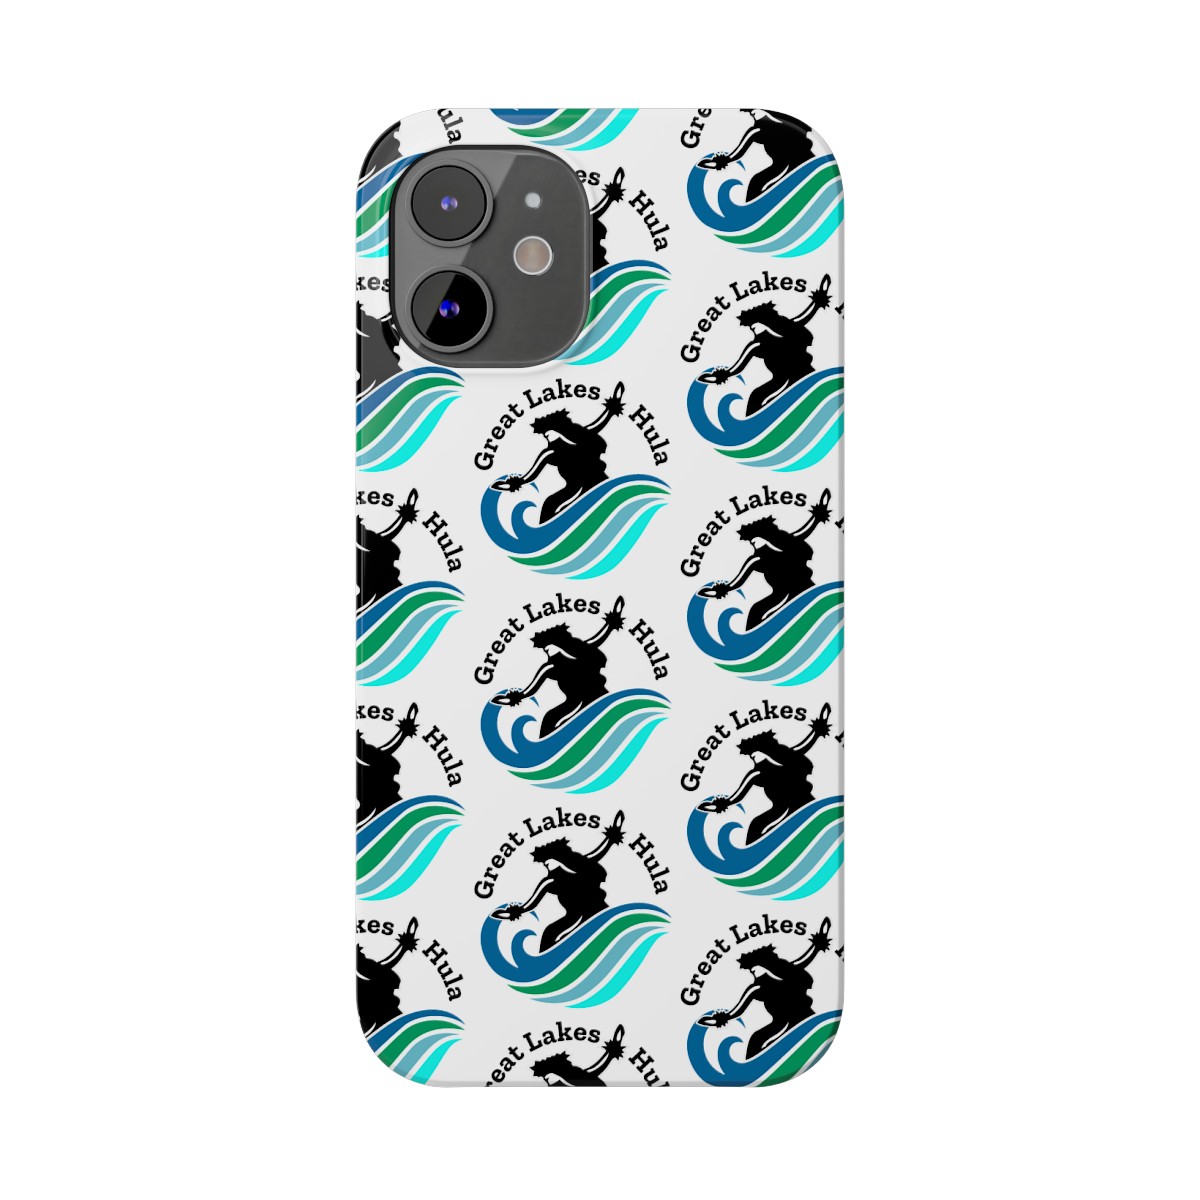 Slim Phone Cases product thumbnail image